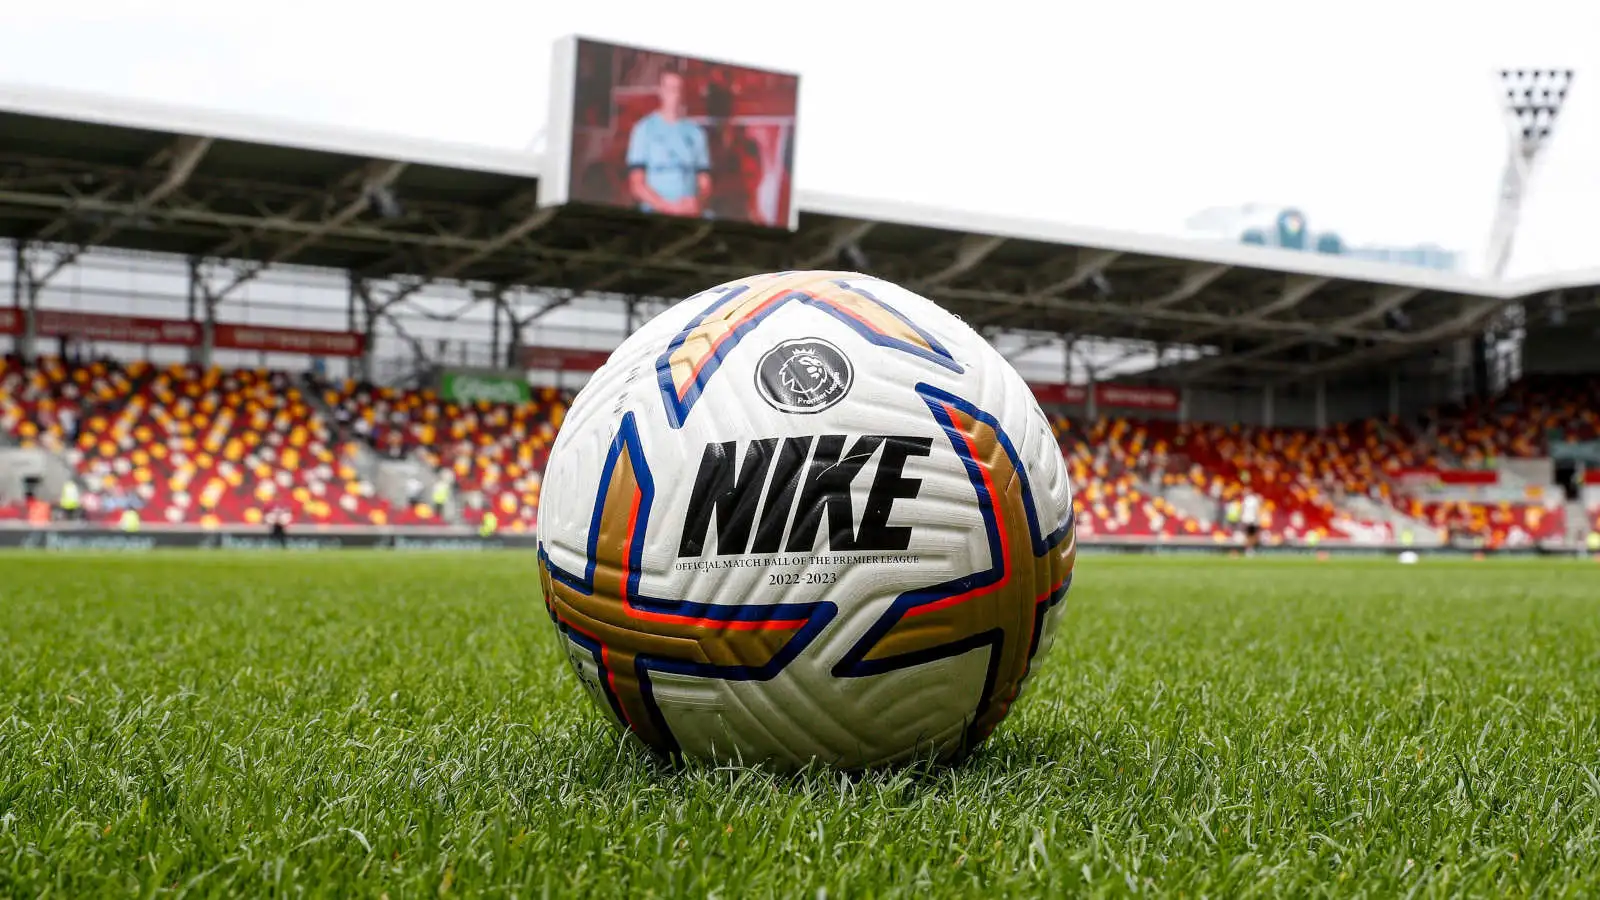 The official 2022/23 Premier League match ball